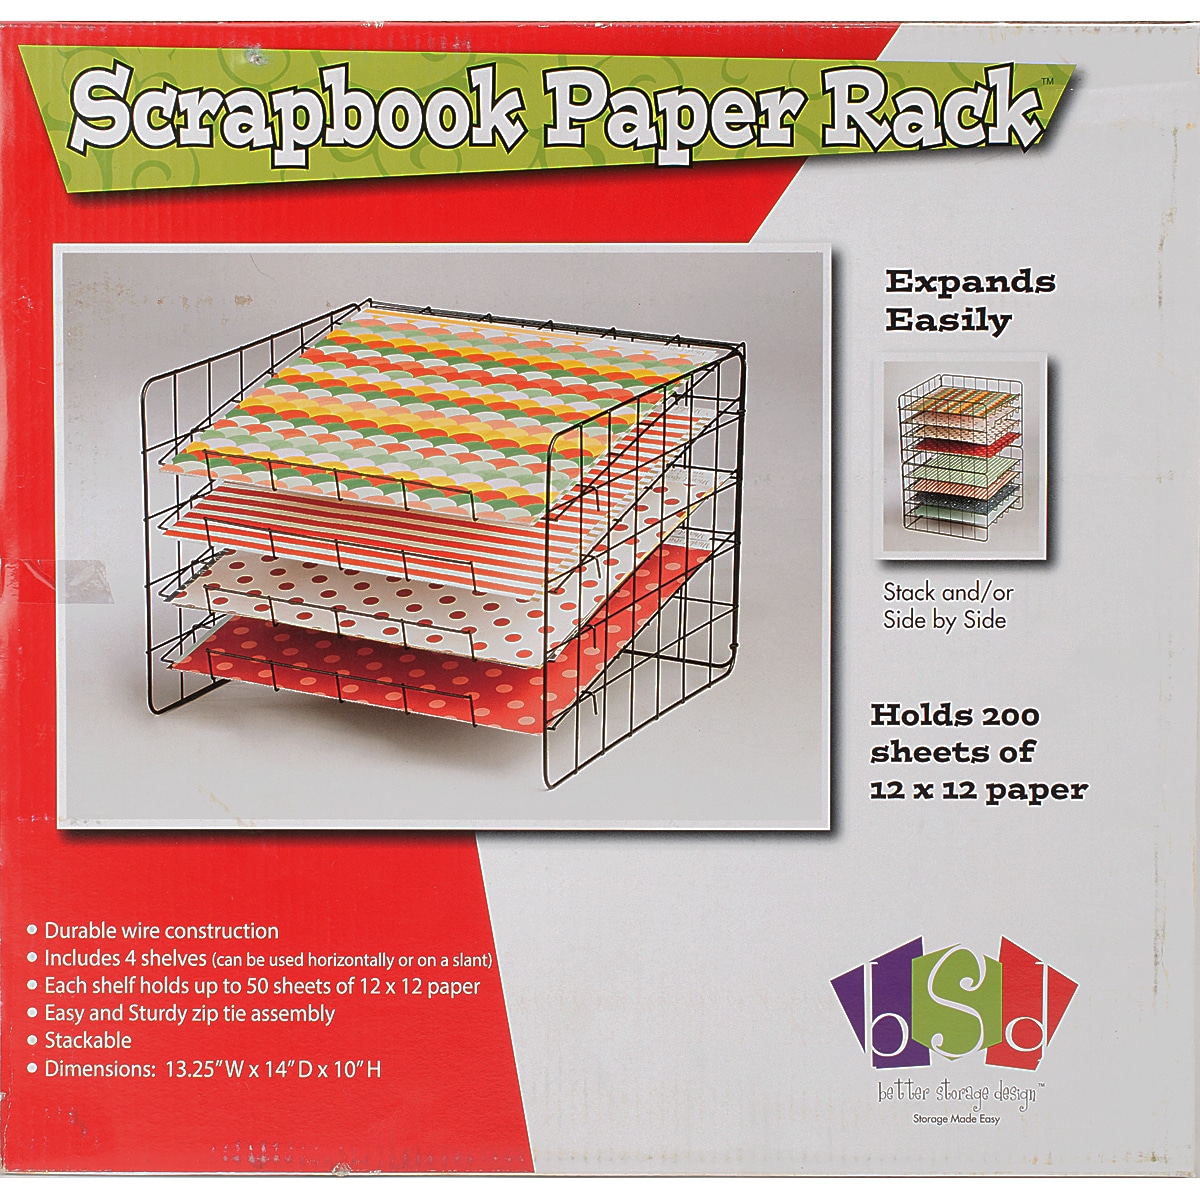 Making a Great Scrapbook Paper Rack